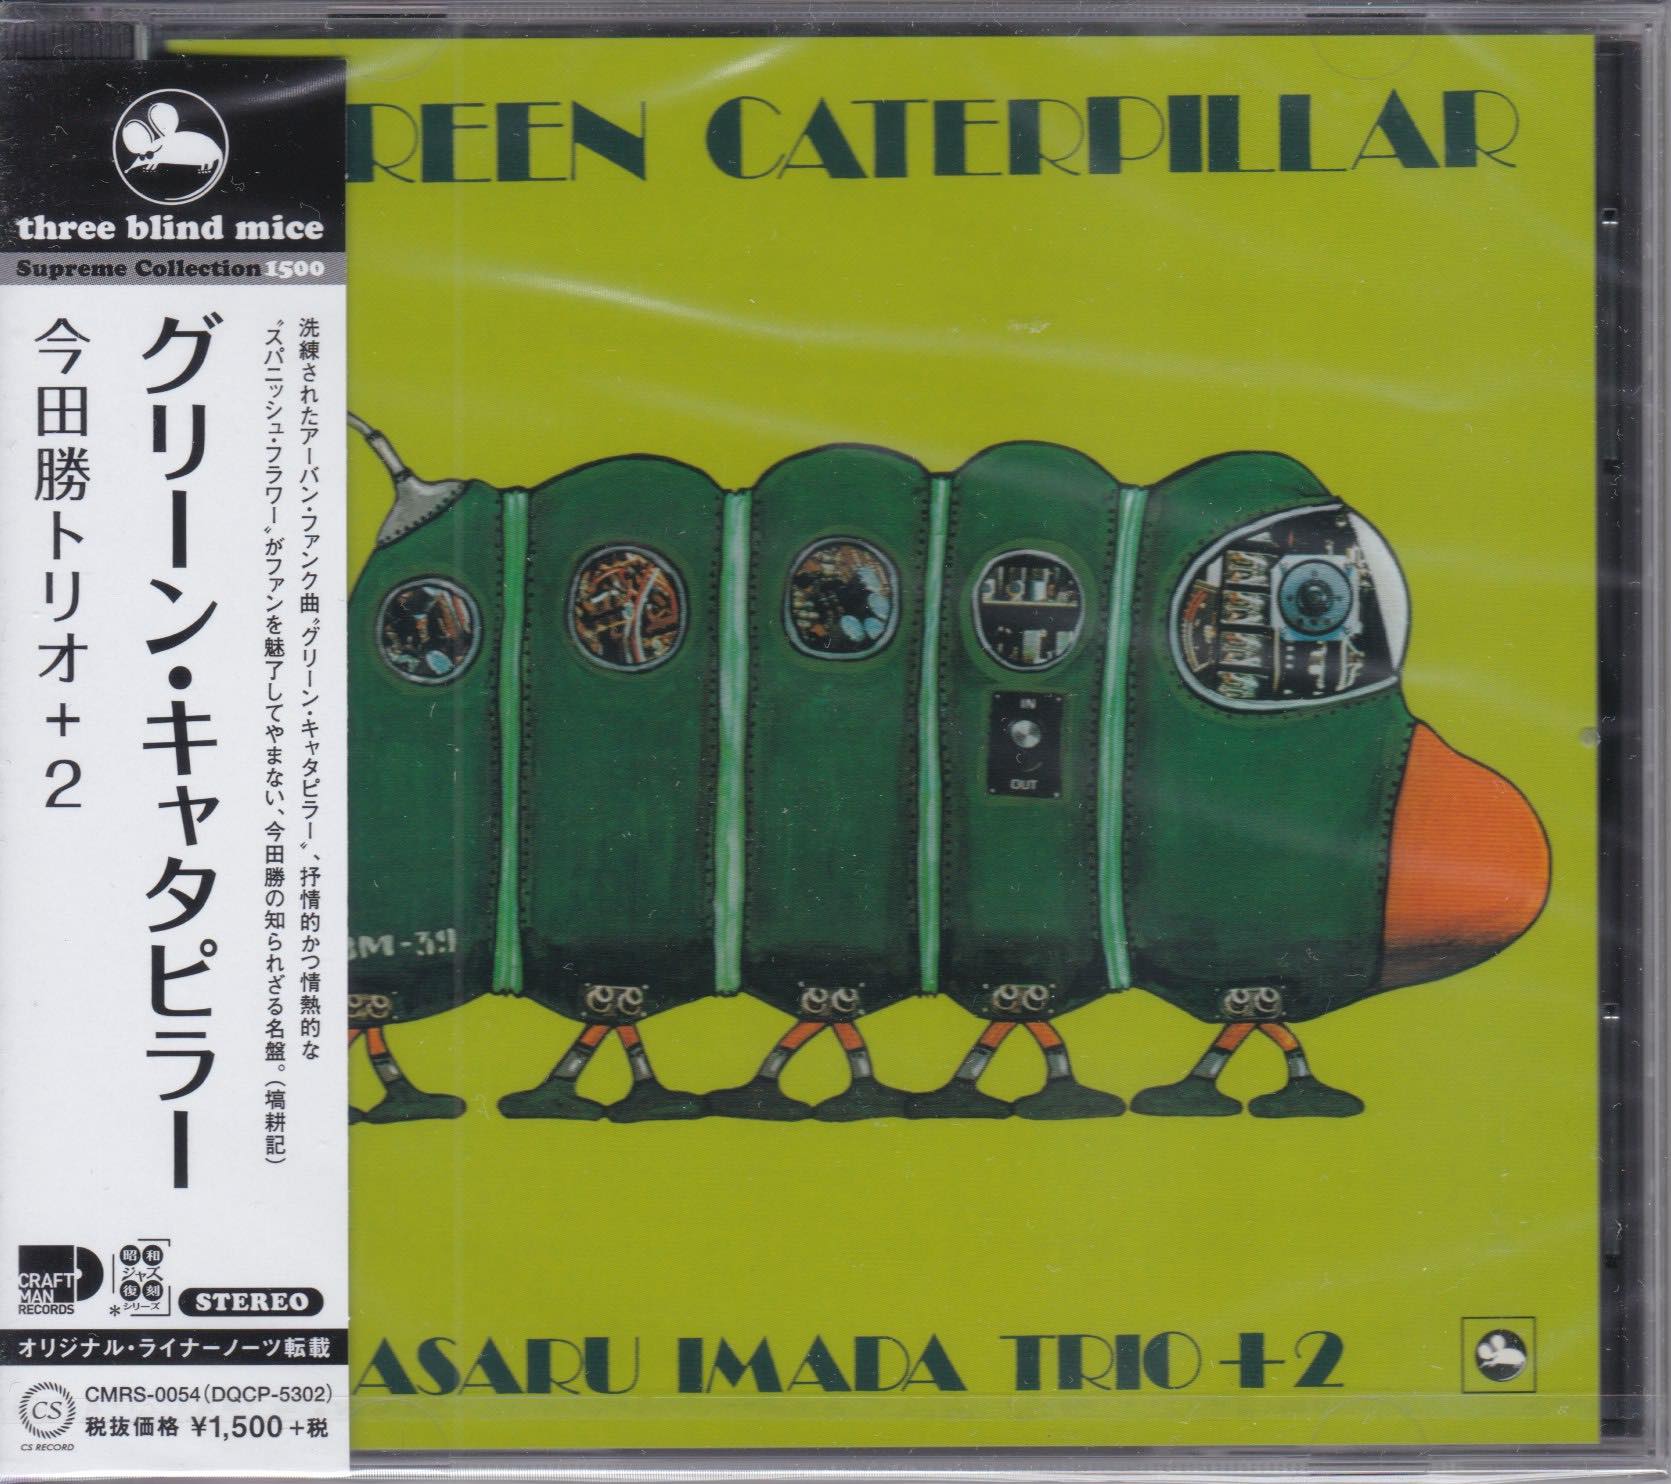 Masaru Imada Trio – Green Caterpillar